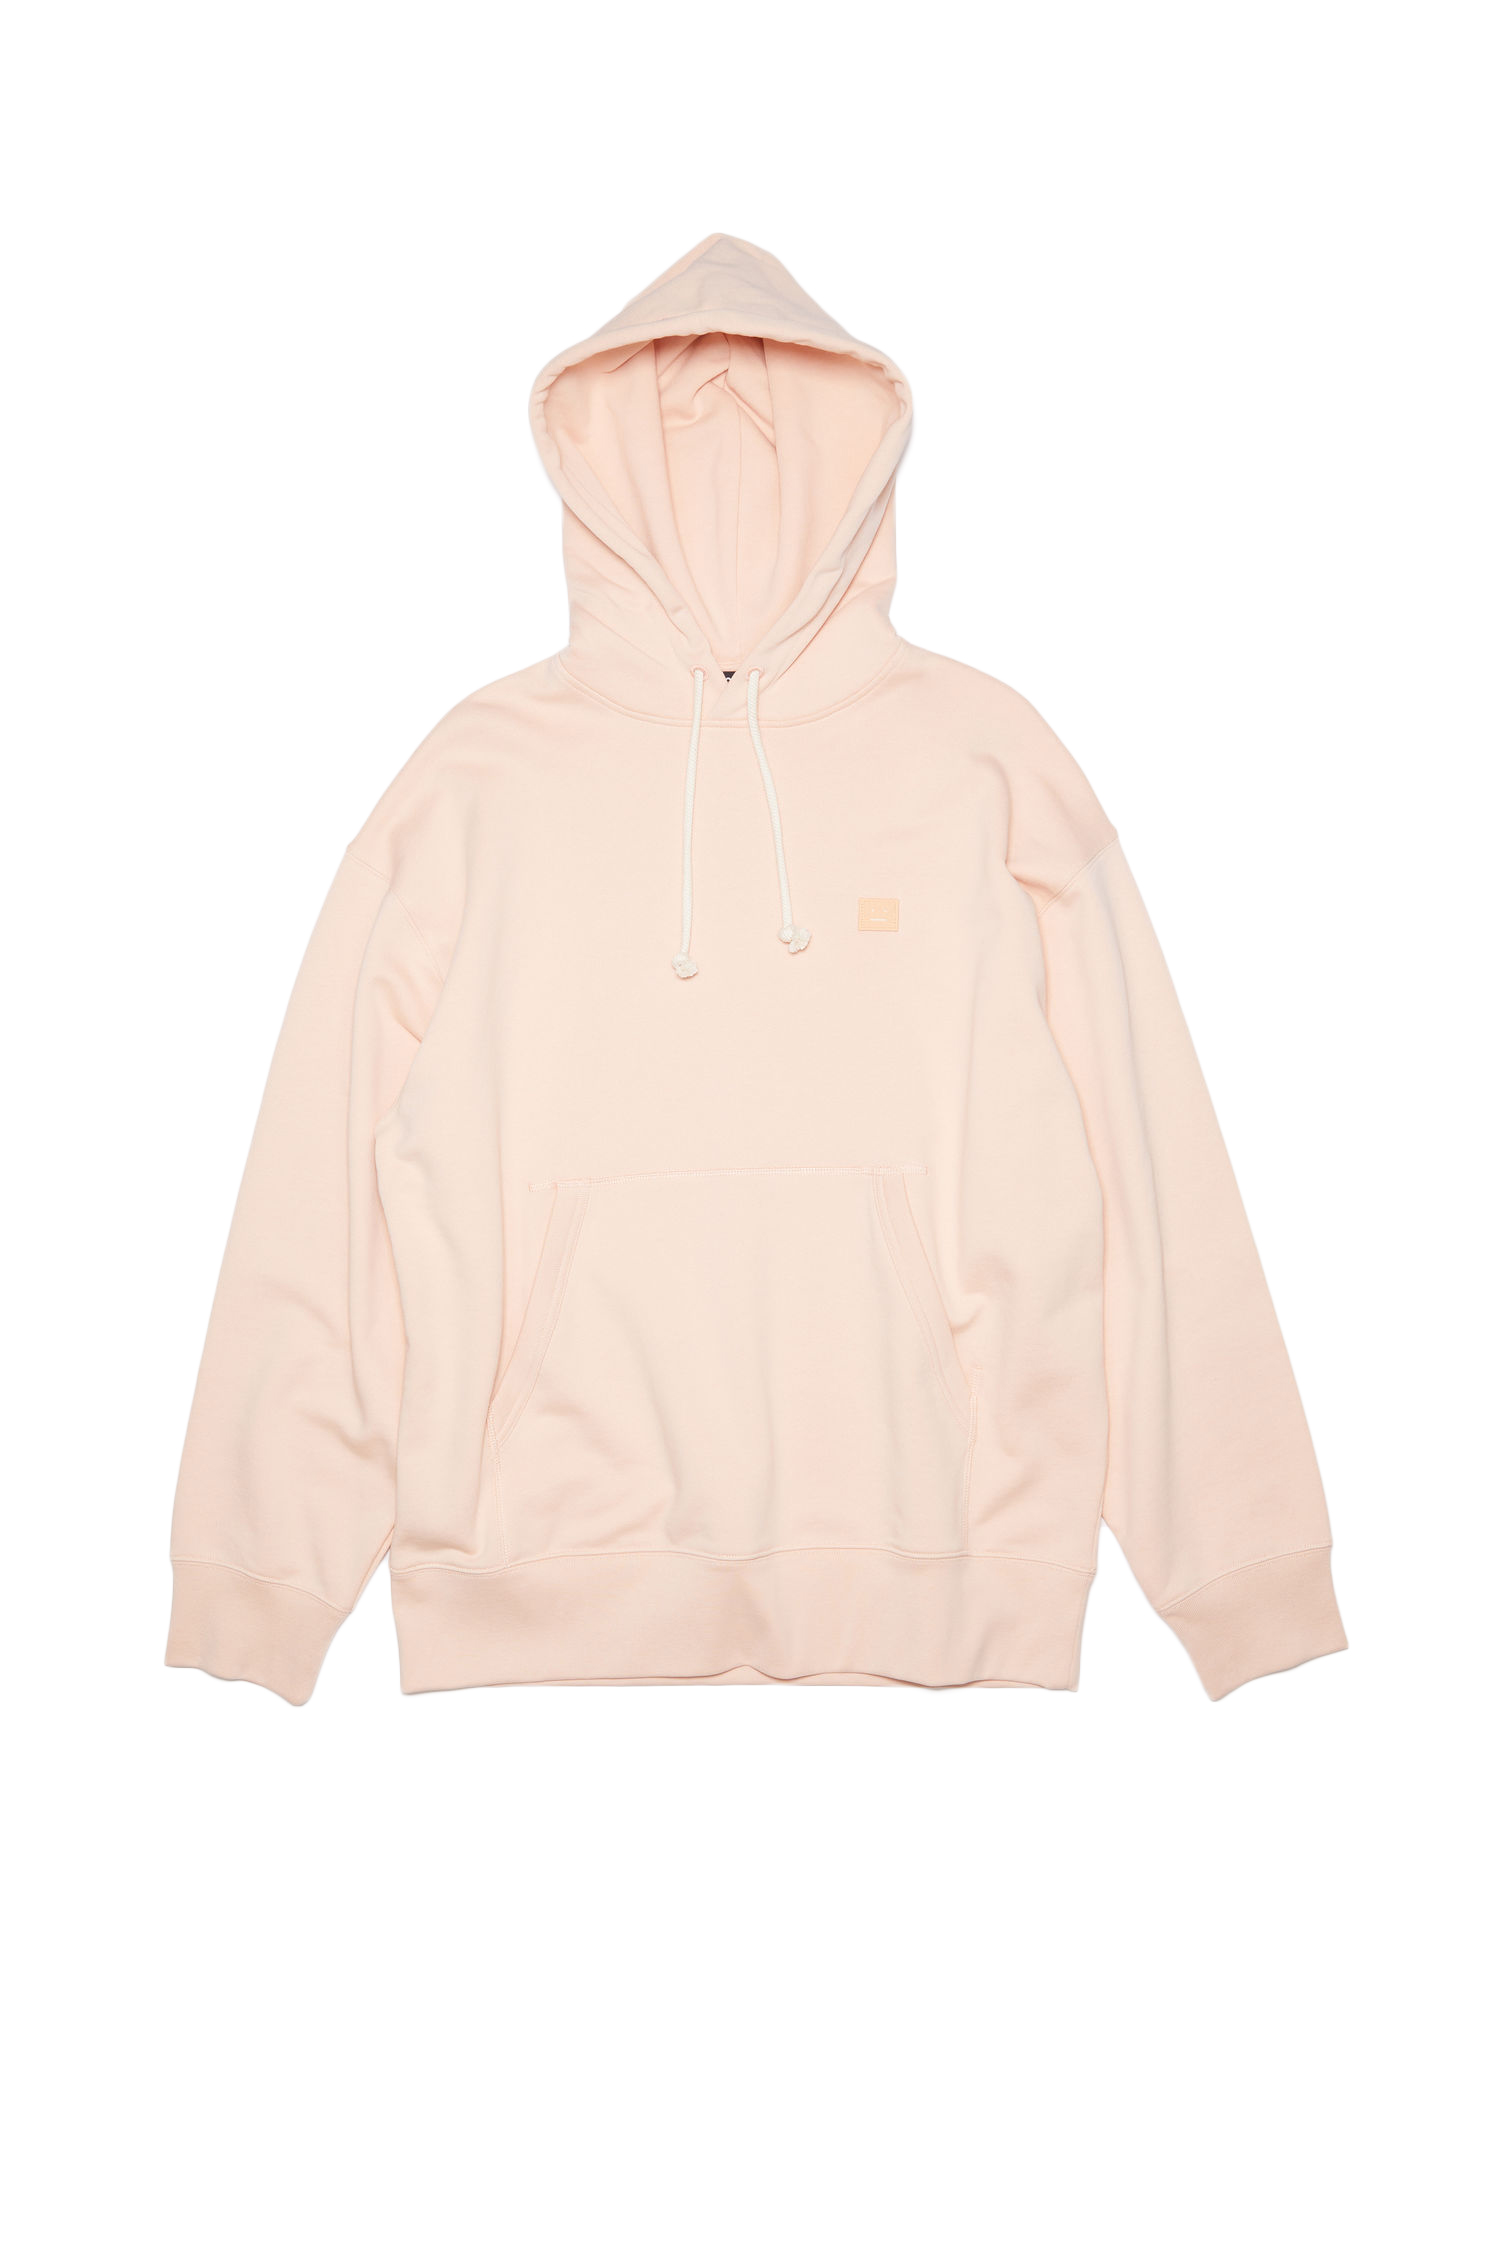 Supreme Sleeve Patch Hooded Sweatshirt Orange Men's - SS17 - GB